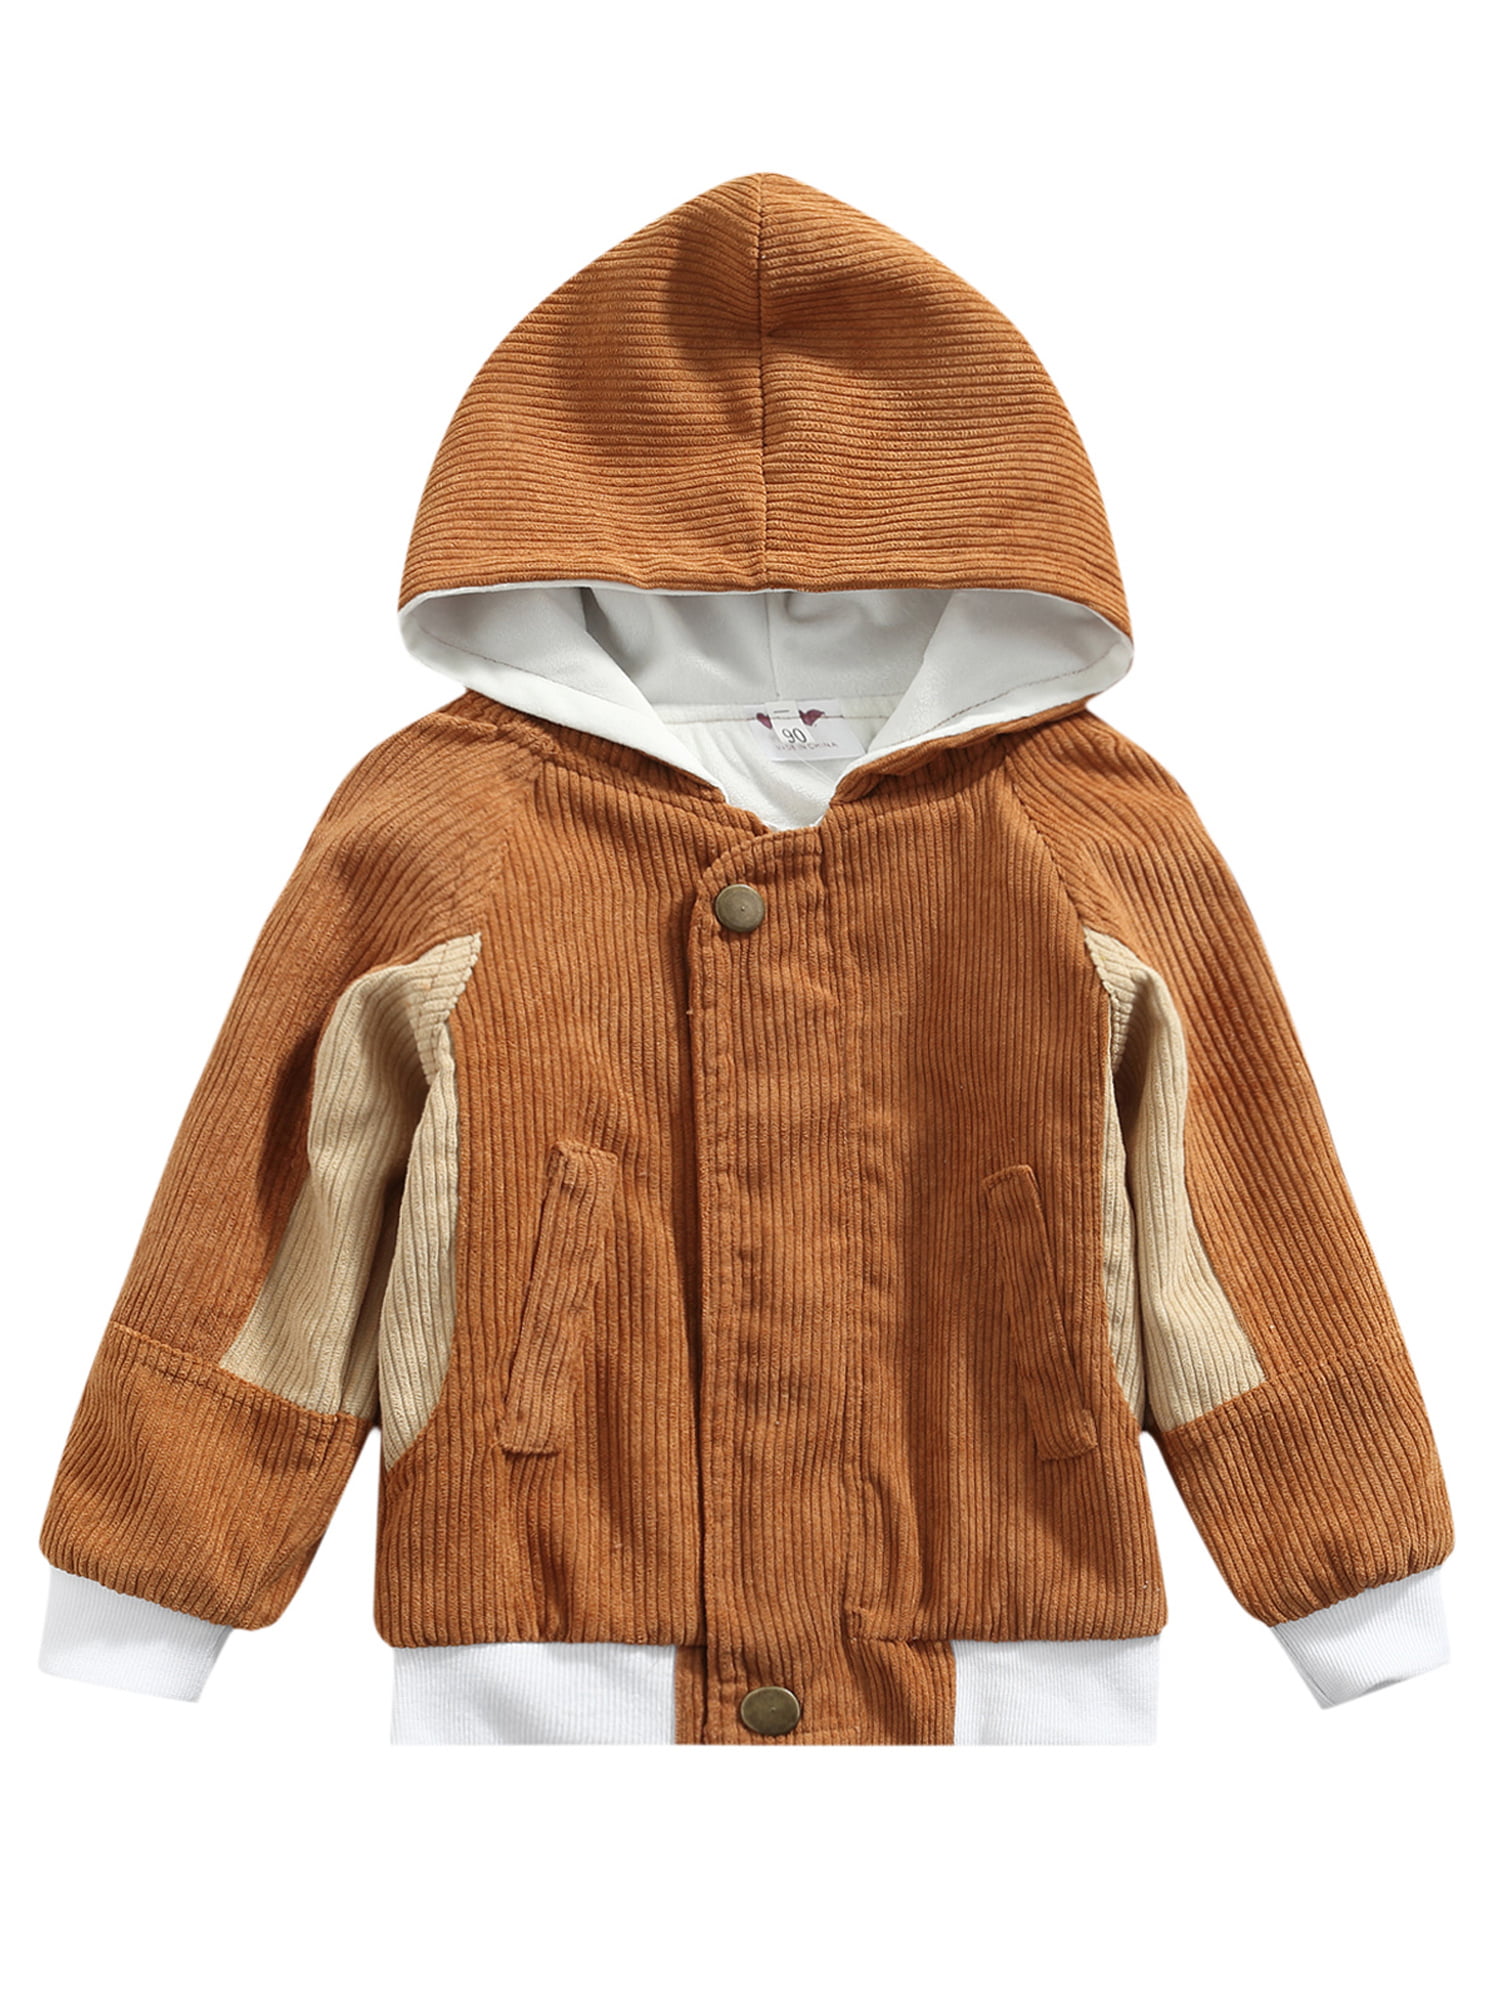 Baby fallCoat|lightweight jacket Unisex Kids Jacket Kids Corduroy Jacket |fall Coat For Toddlers Kleding Unisex kinderkleding Jacks & Jassen Fall Outfit For Boys and Girls 